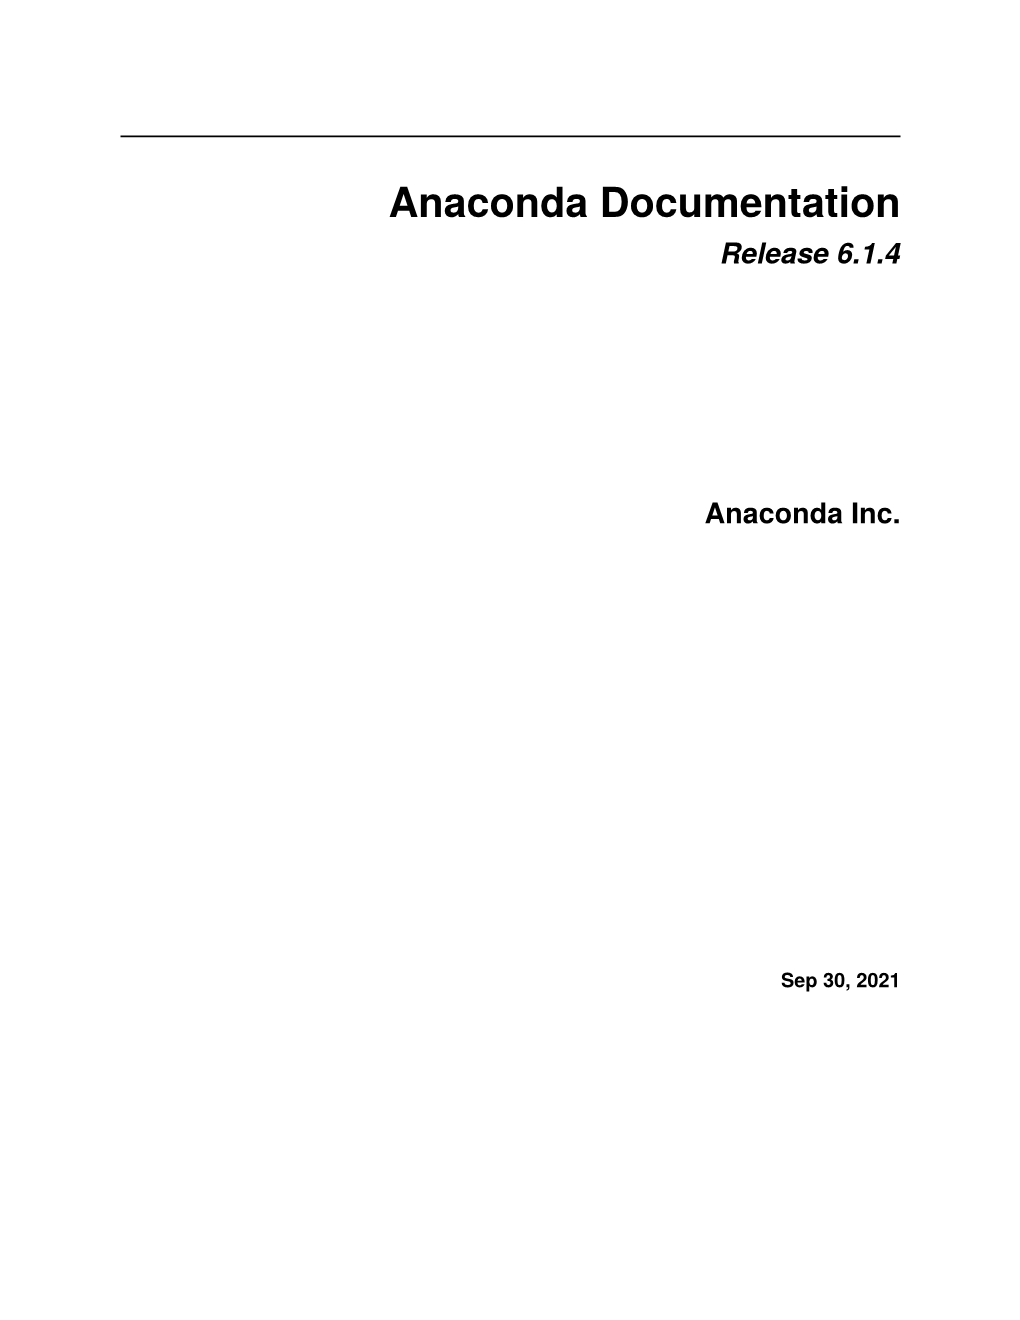 Anaconda Documentation Release 6.1.4